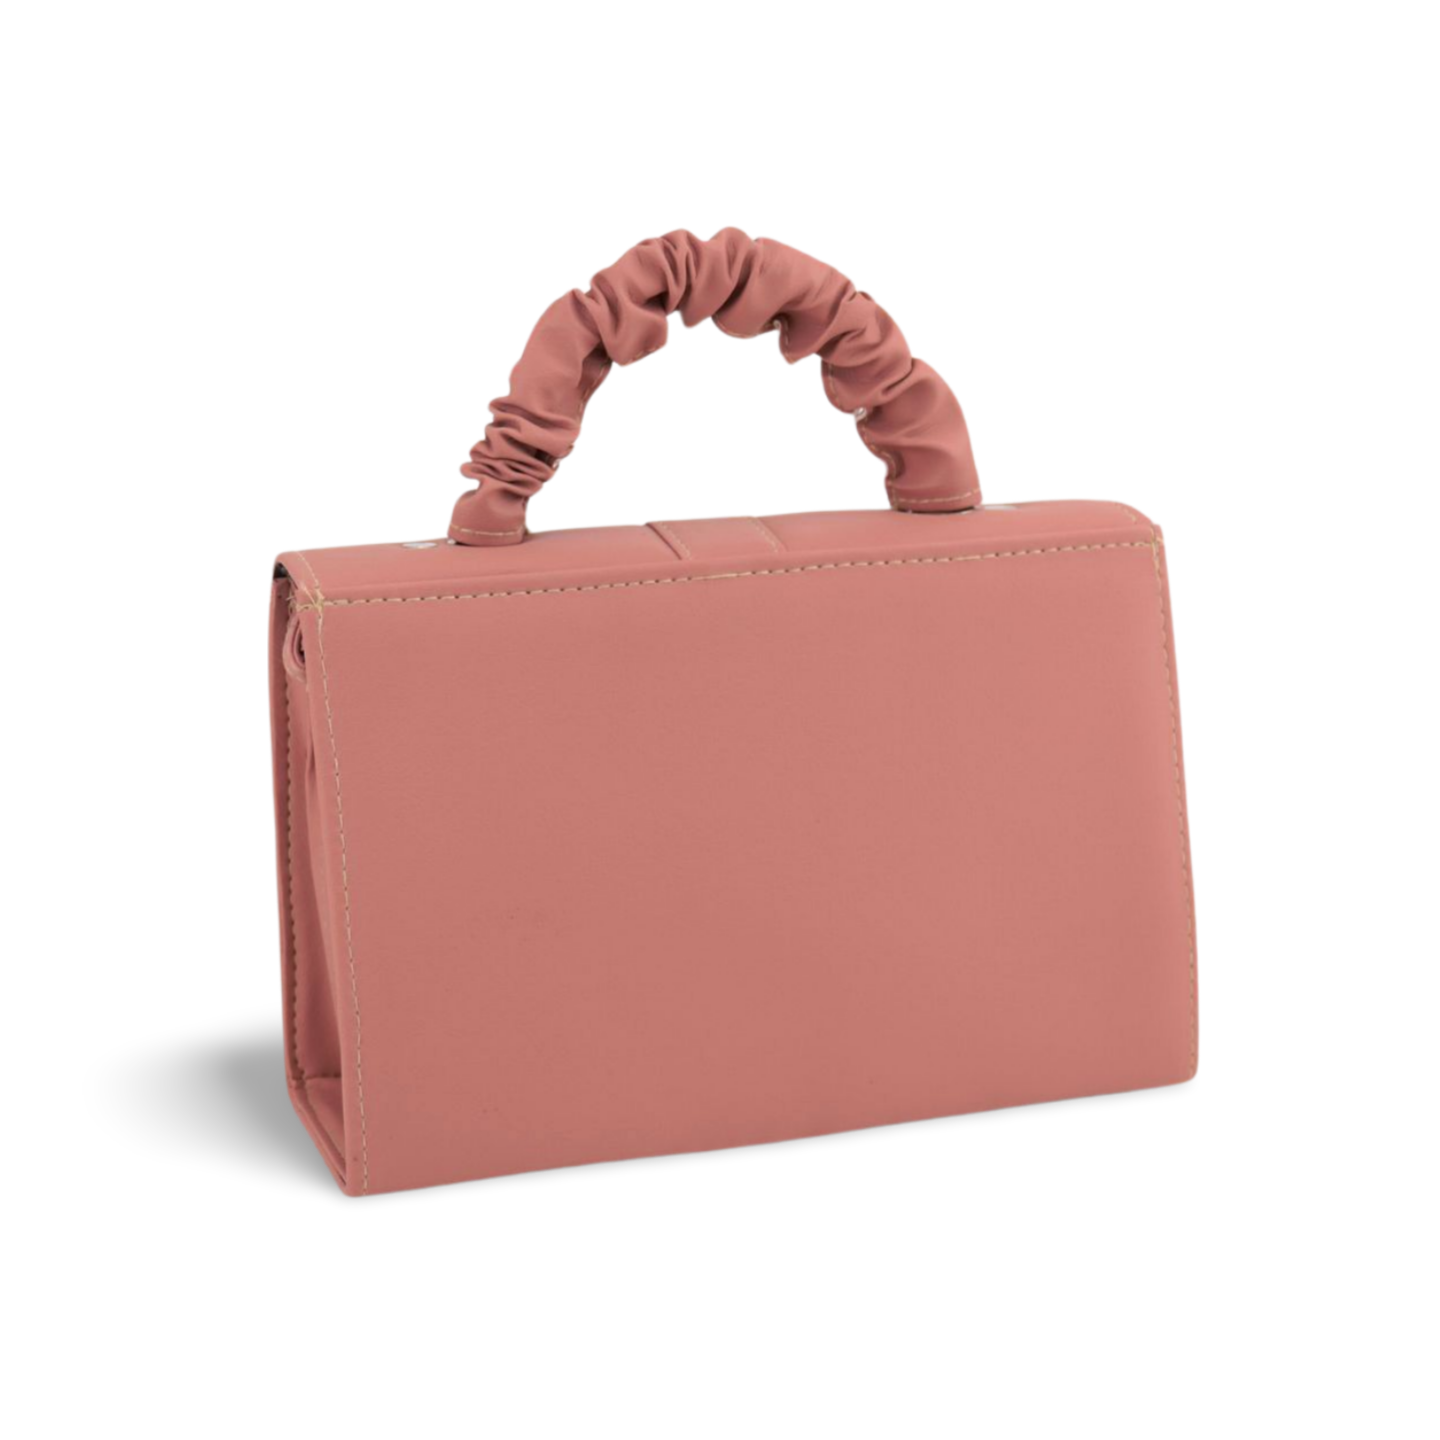 Swirly Scrunchie Handle Handbag with Chic Gold Ring Detail